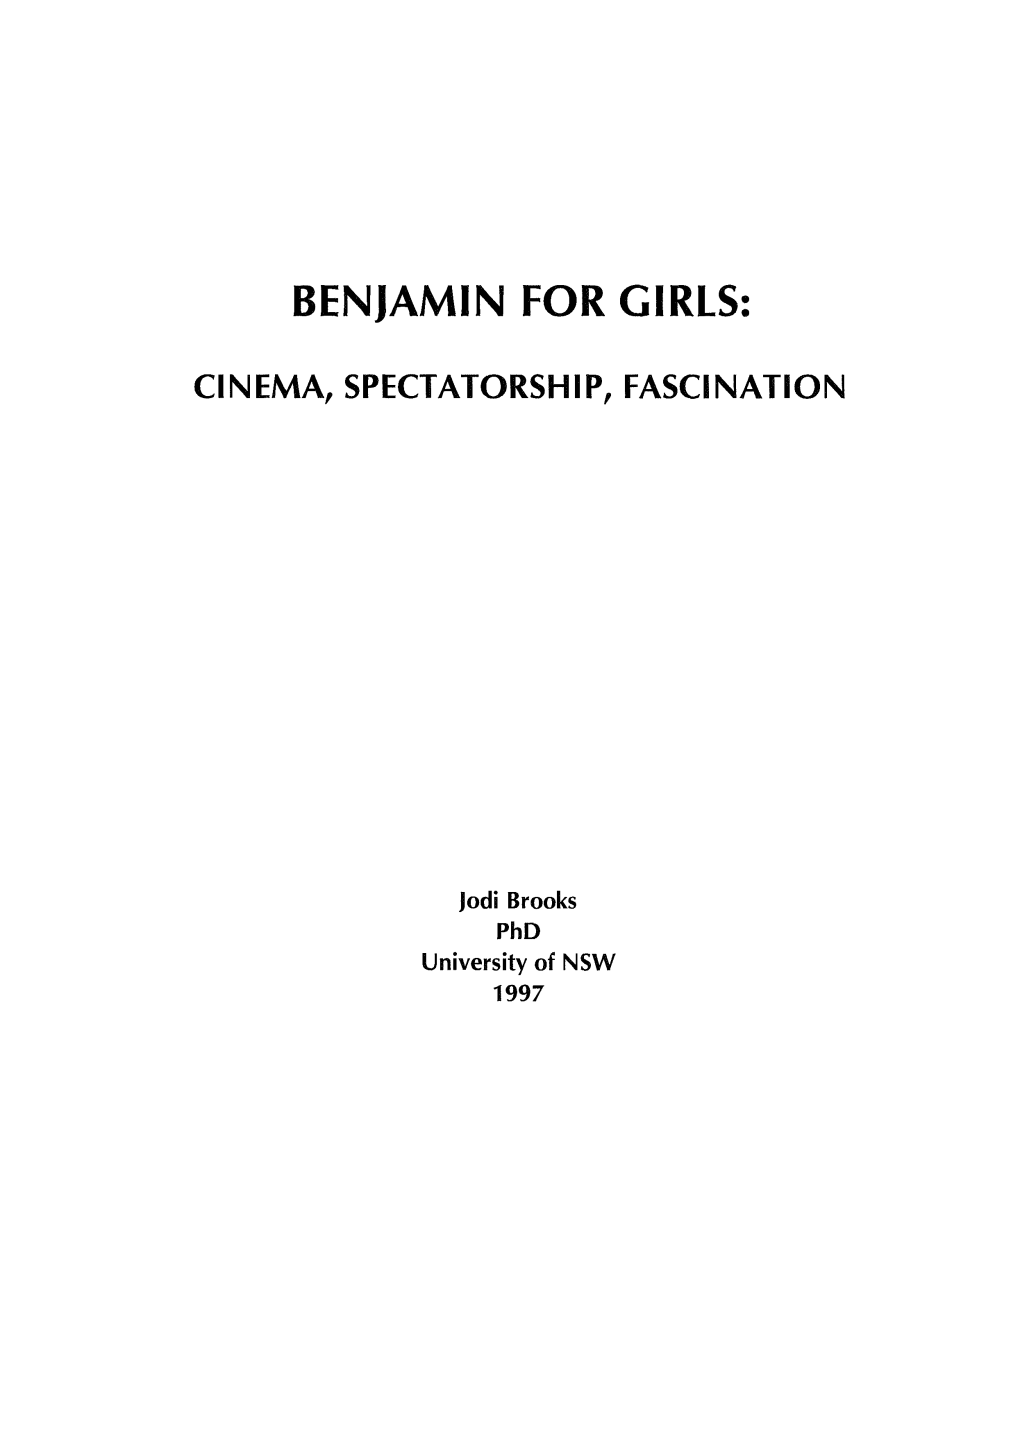 Benjamin for Girls